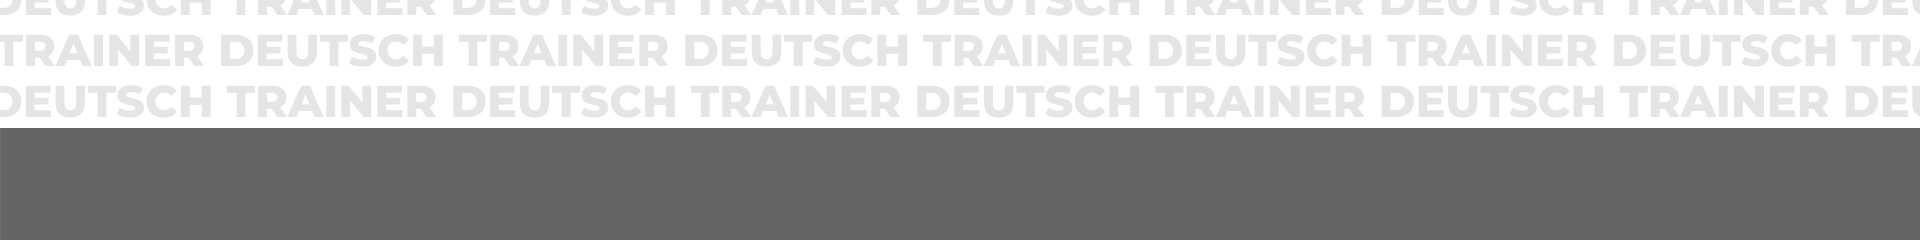 creator cover deutsch.trainer